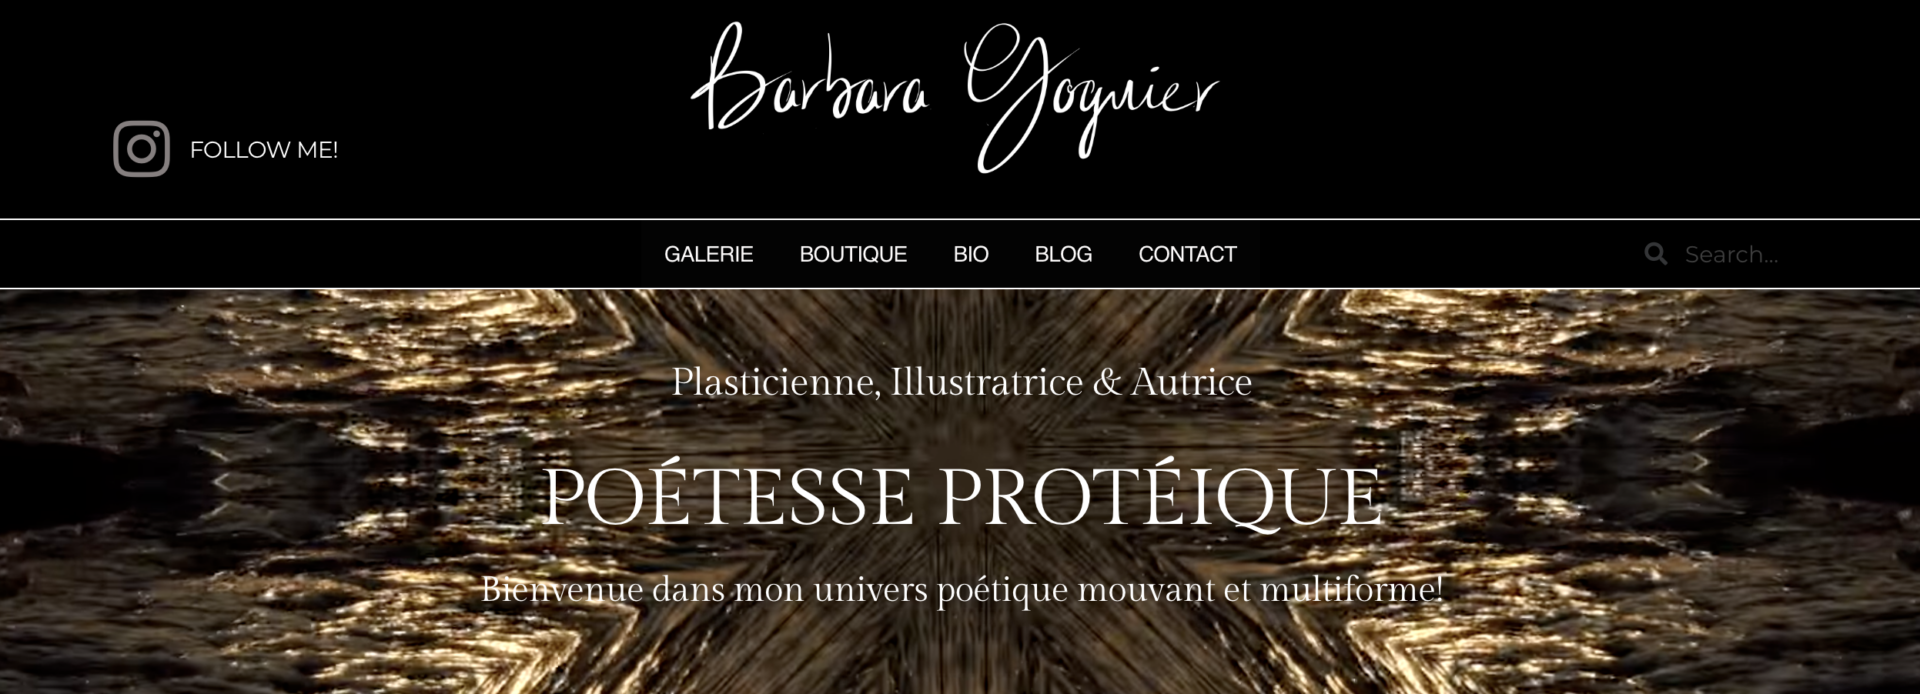 Nouveau site internet de Barbara Goguier - artiste plasticienne, illustratrice et autrice